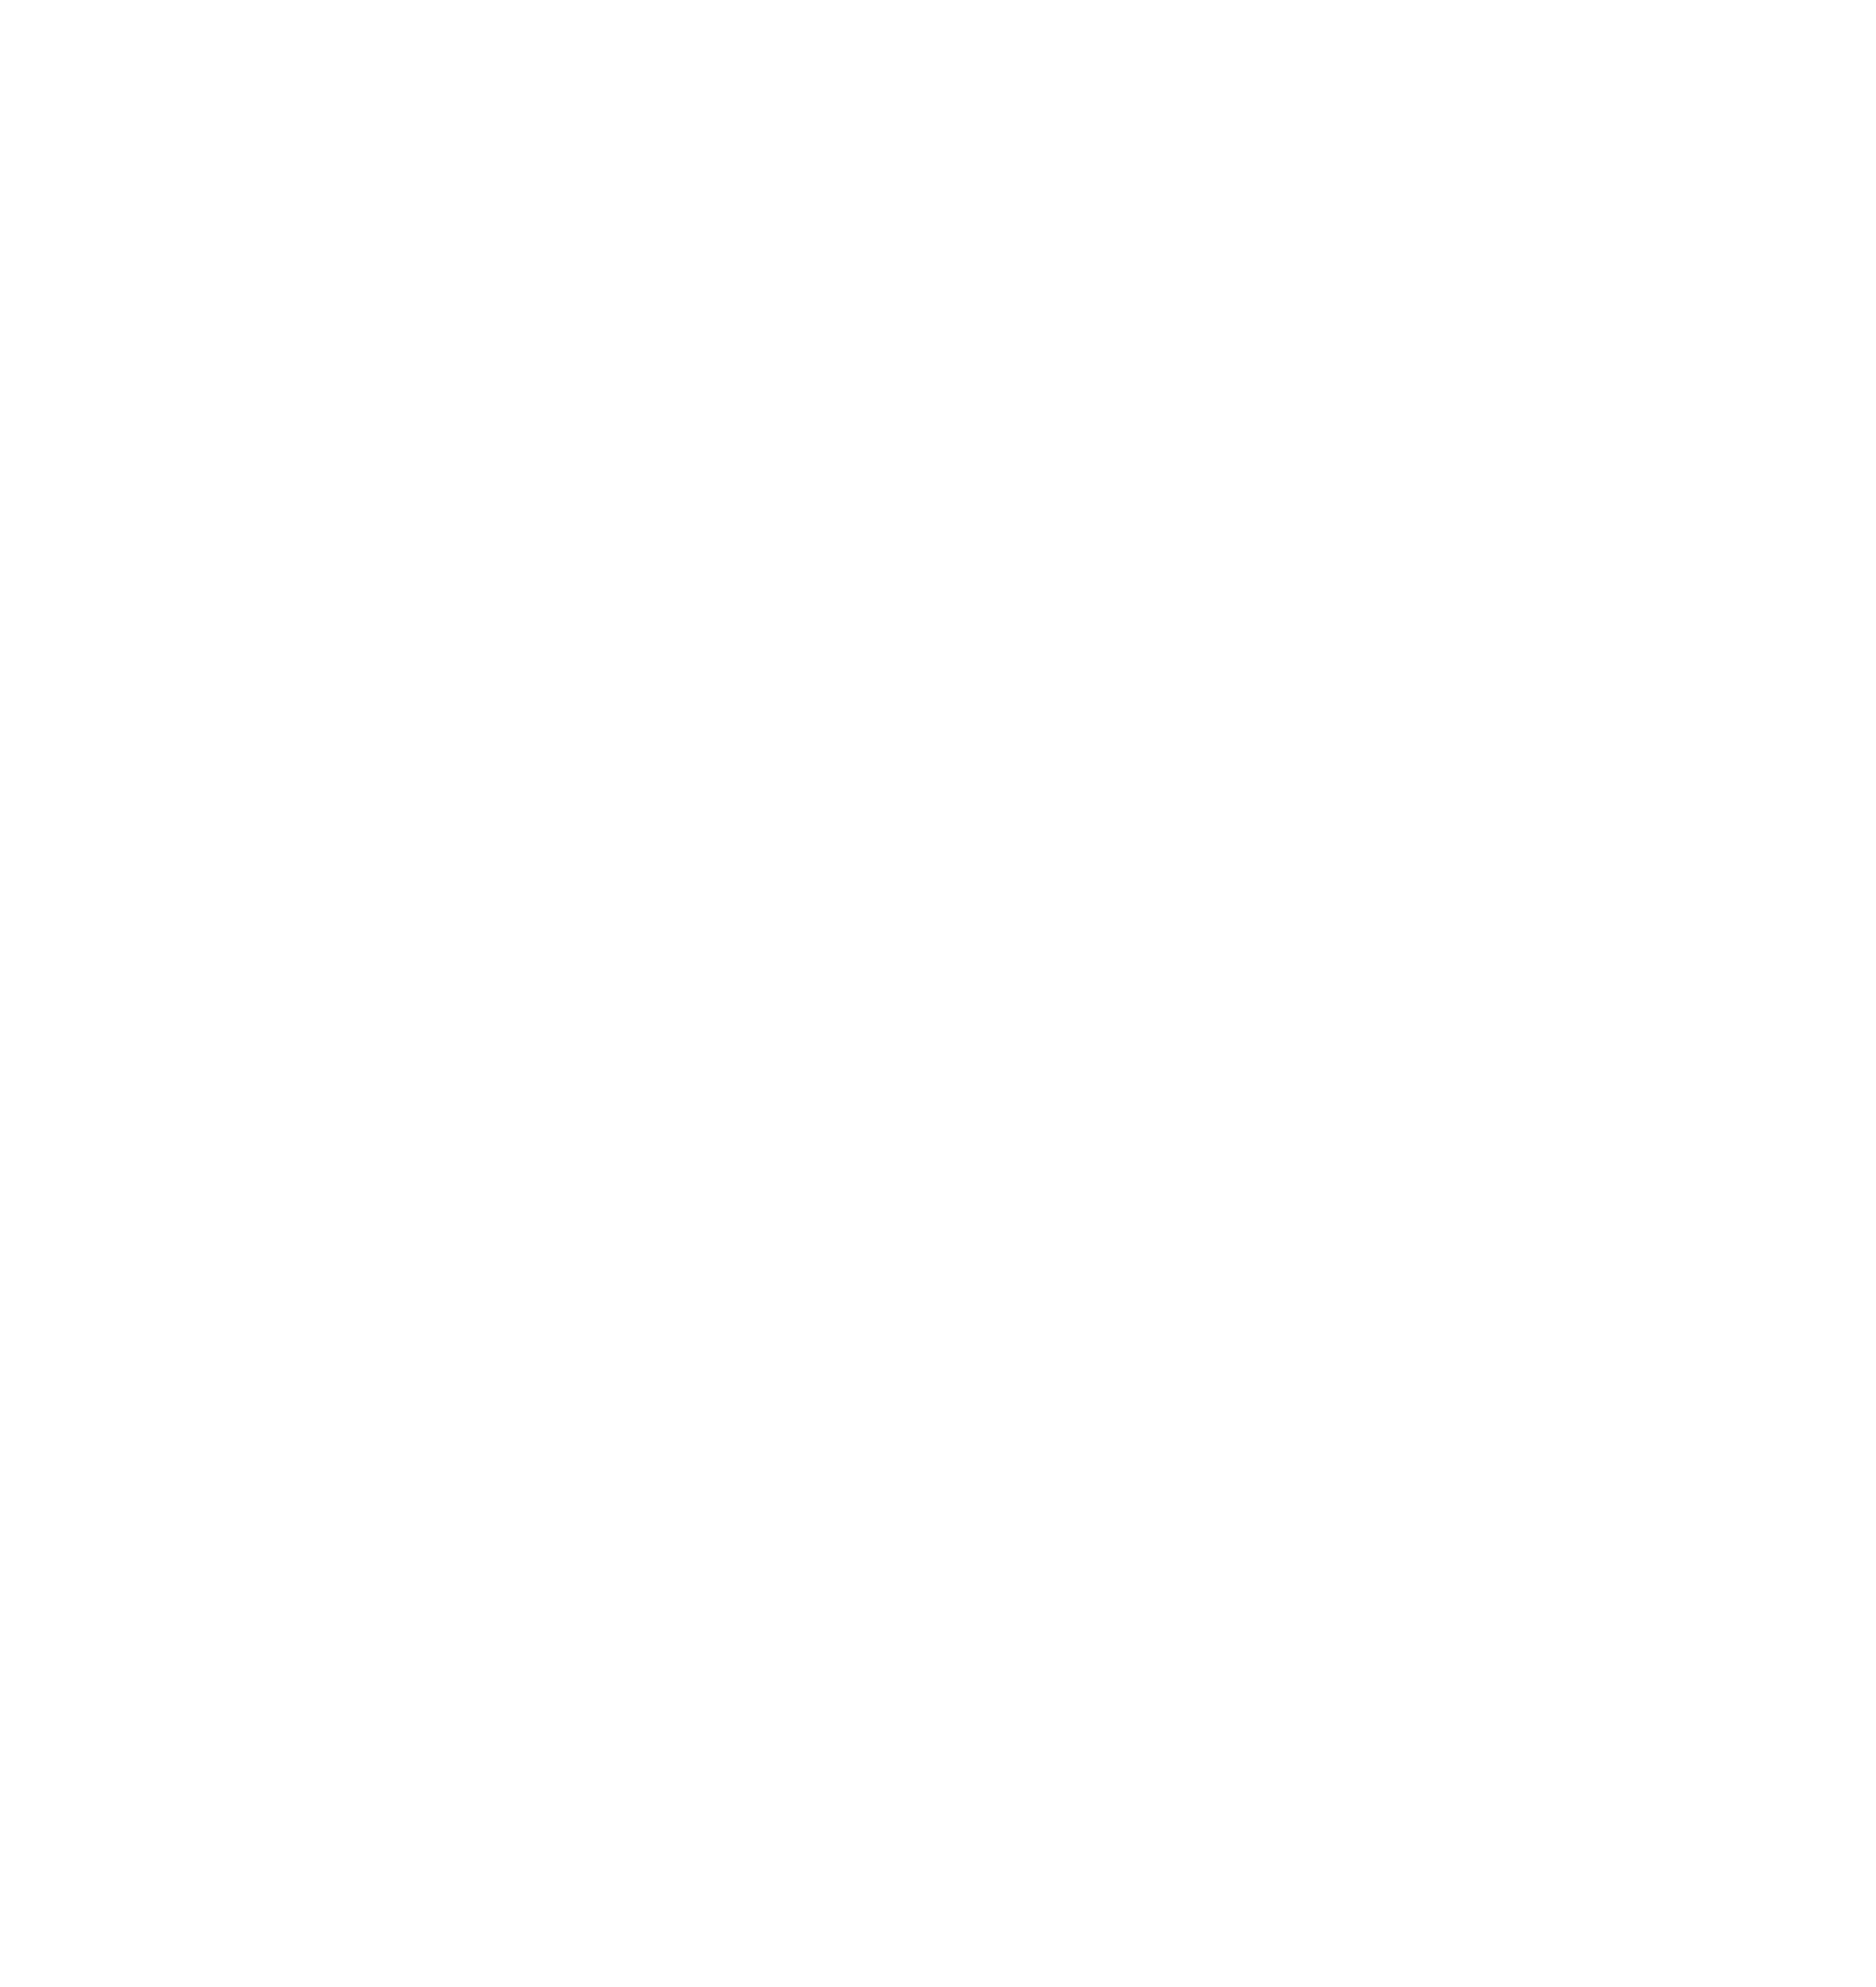 2023 StuPa election logo